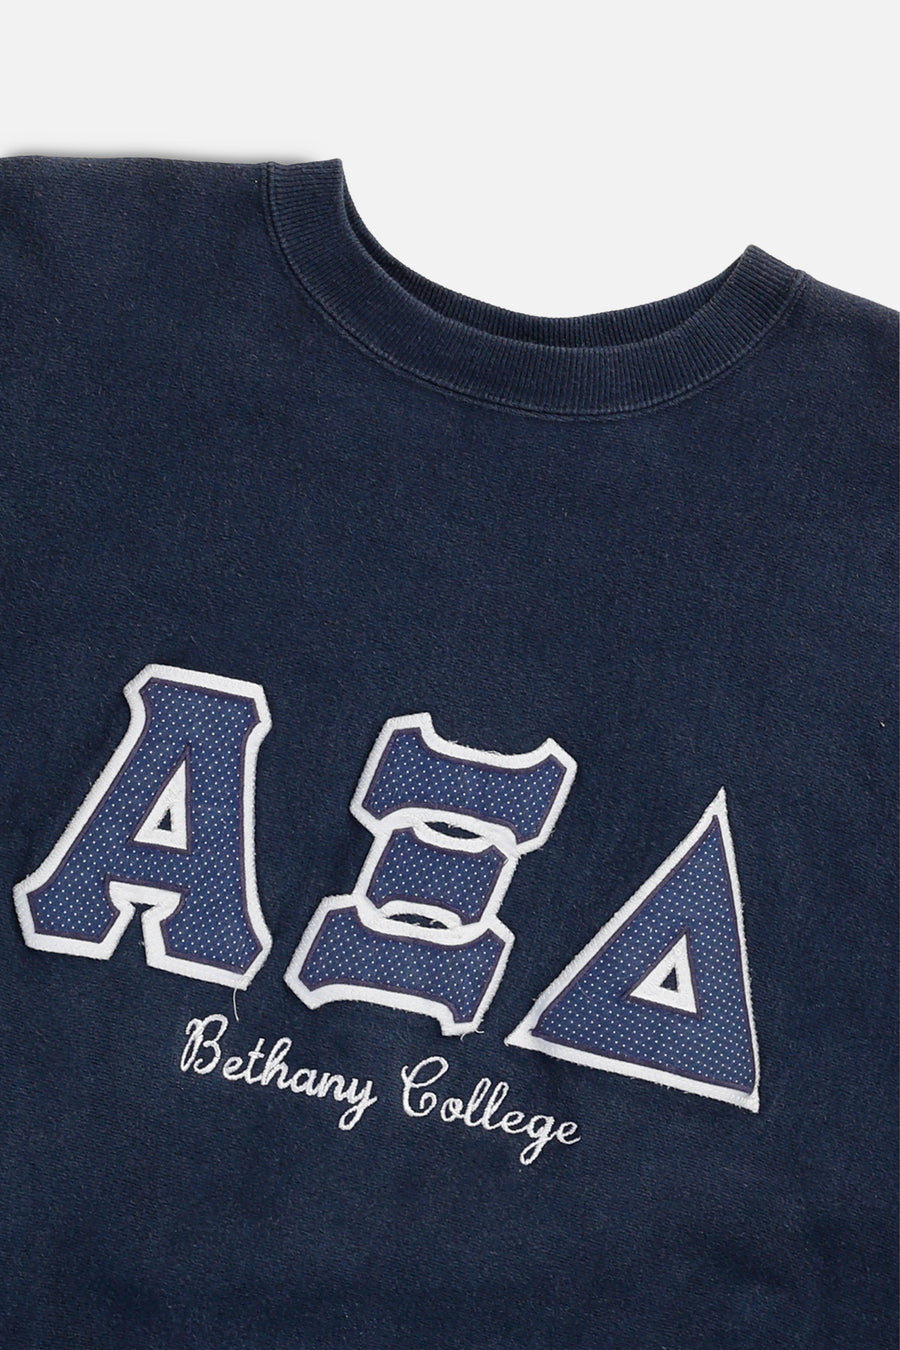 Vintage Bethany College Sweatshirt - XL